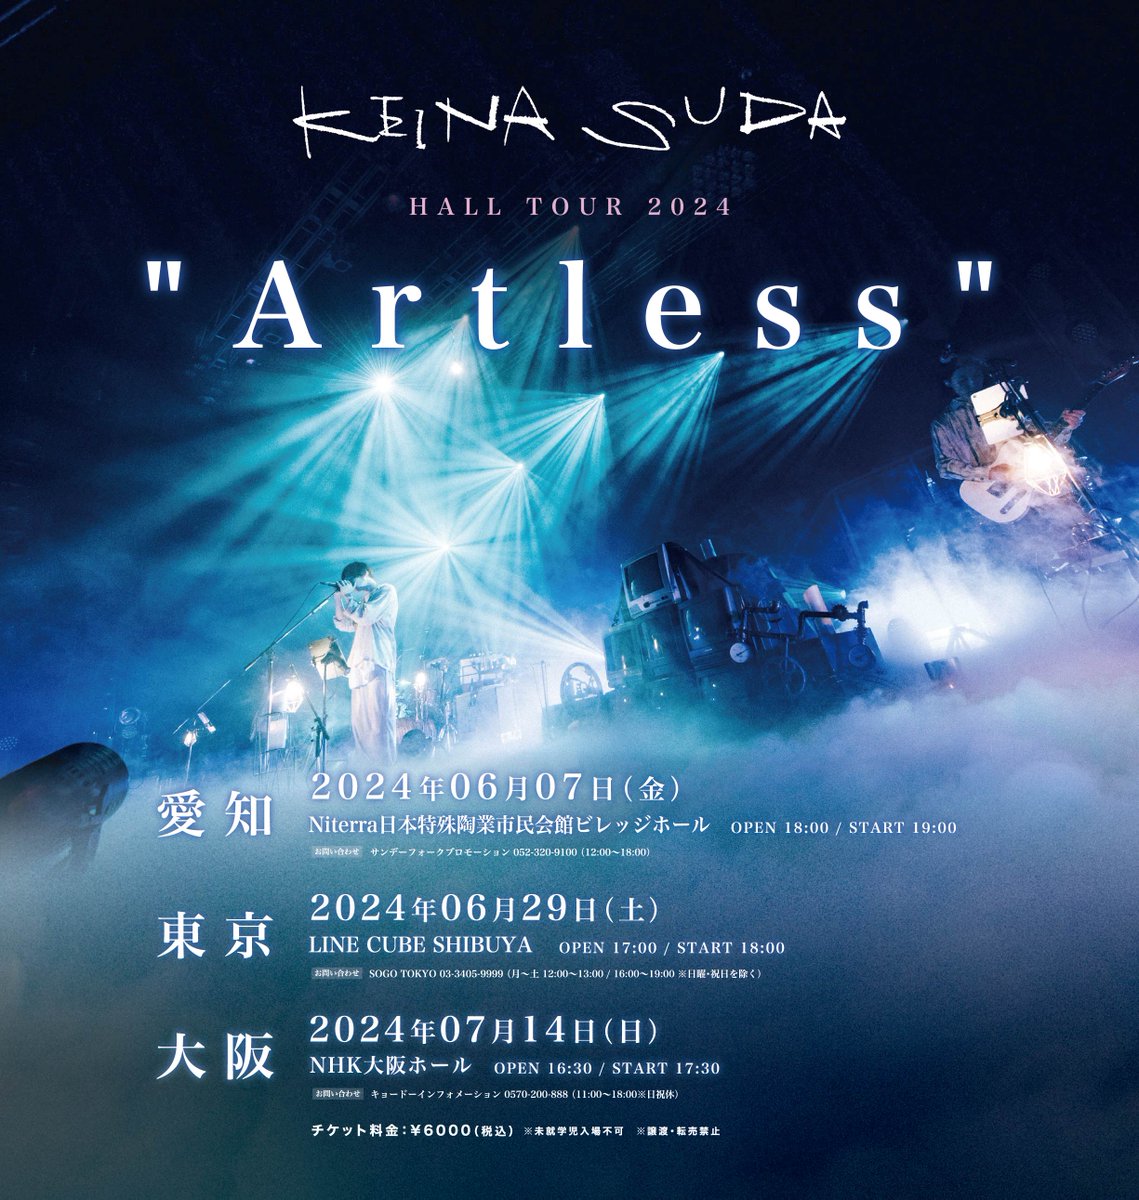 < TOUR > 6月より東名阪にて開催 「須田景凪 HALL TOUR 2024 “Artless”」 Instagram先行受付開始！ ▽受付期間🎫 受付期間：4/23(火)18:00 ～ 5/6(月・祝)23:59 チケット料金：¥6,000(税込) 全席指定 ▽詳細はこちら tabloid0120.com/live/4426/